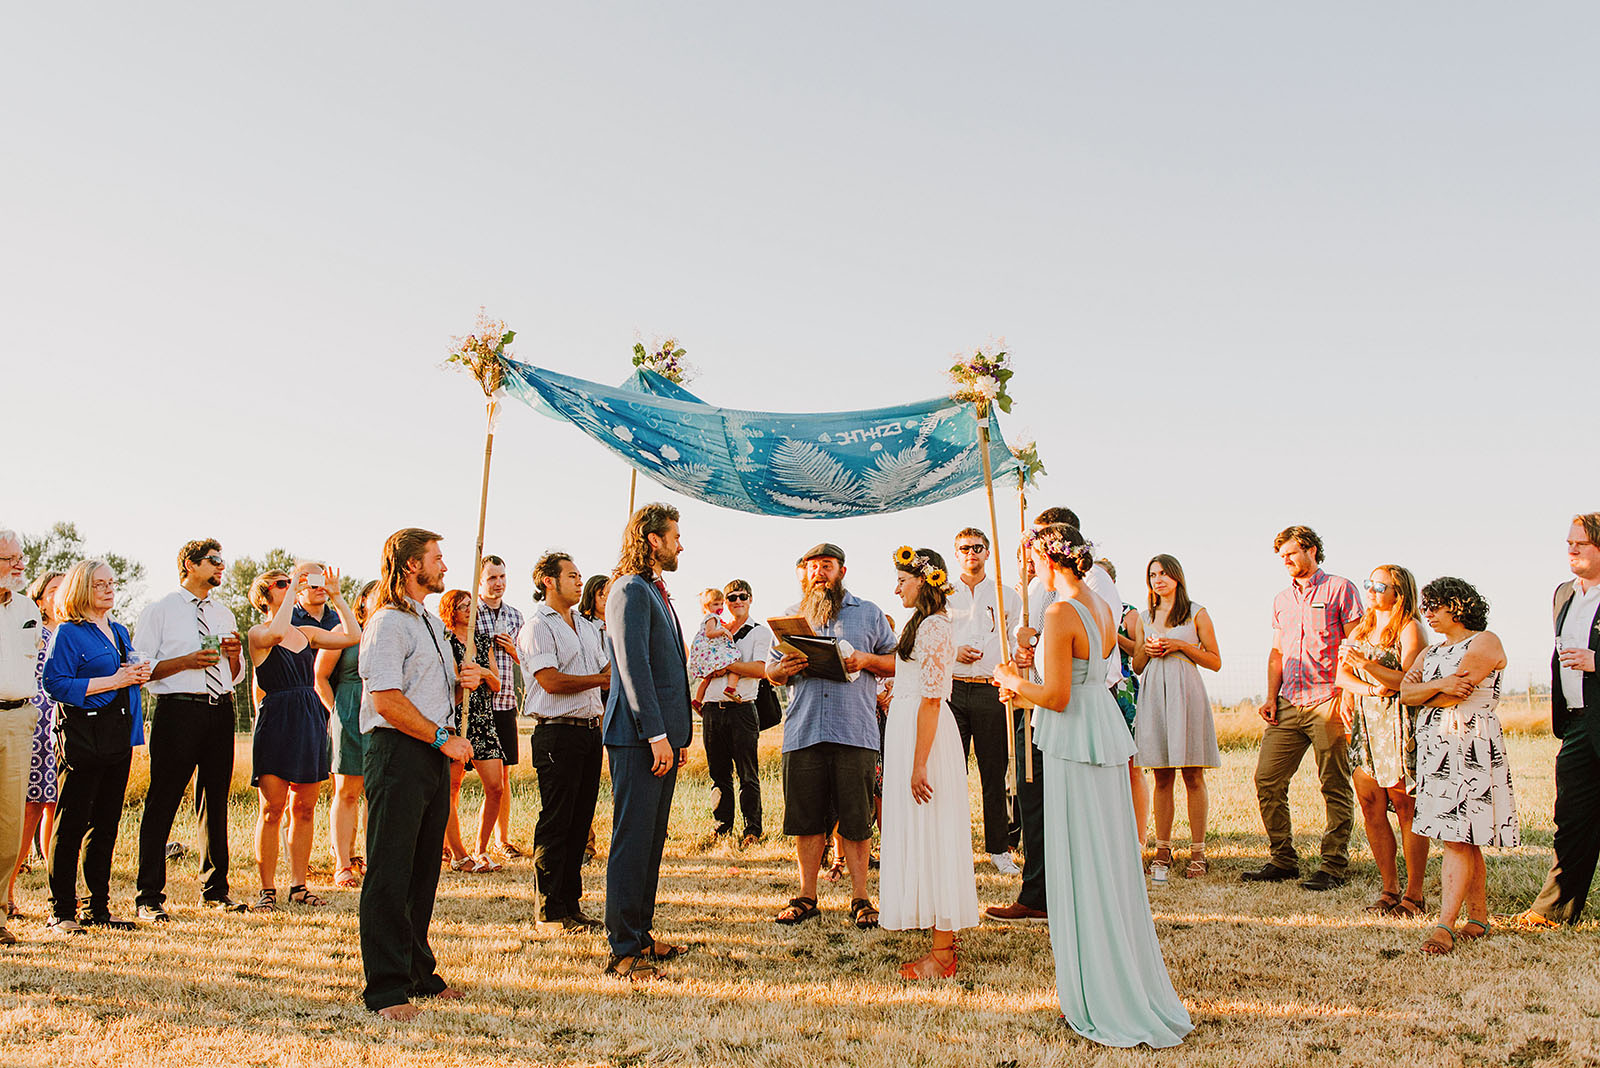 Ceremony under a chuppah at the Croft Farm | Sauvie Island Wedding